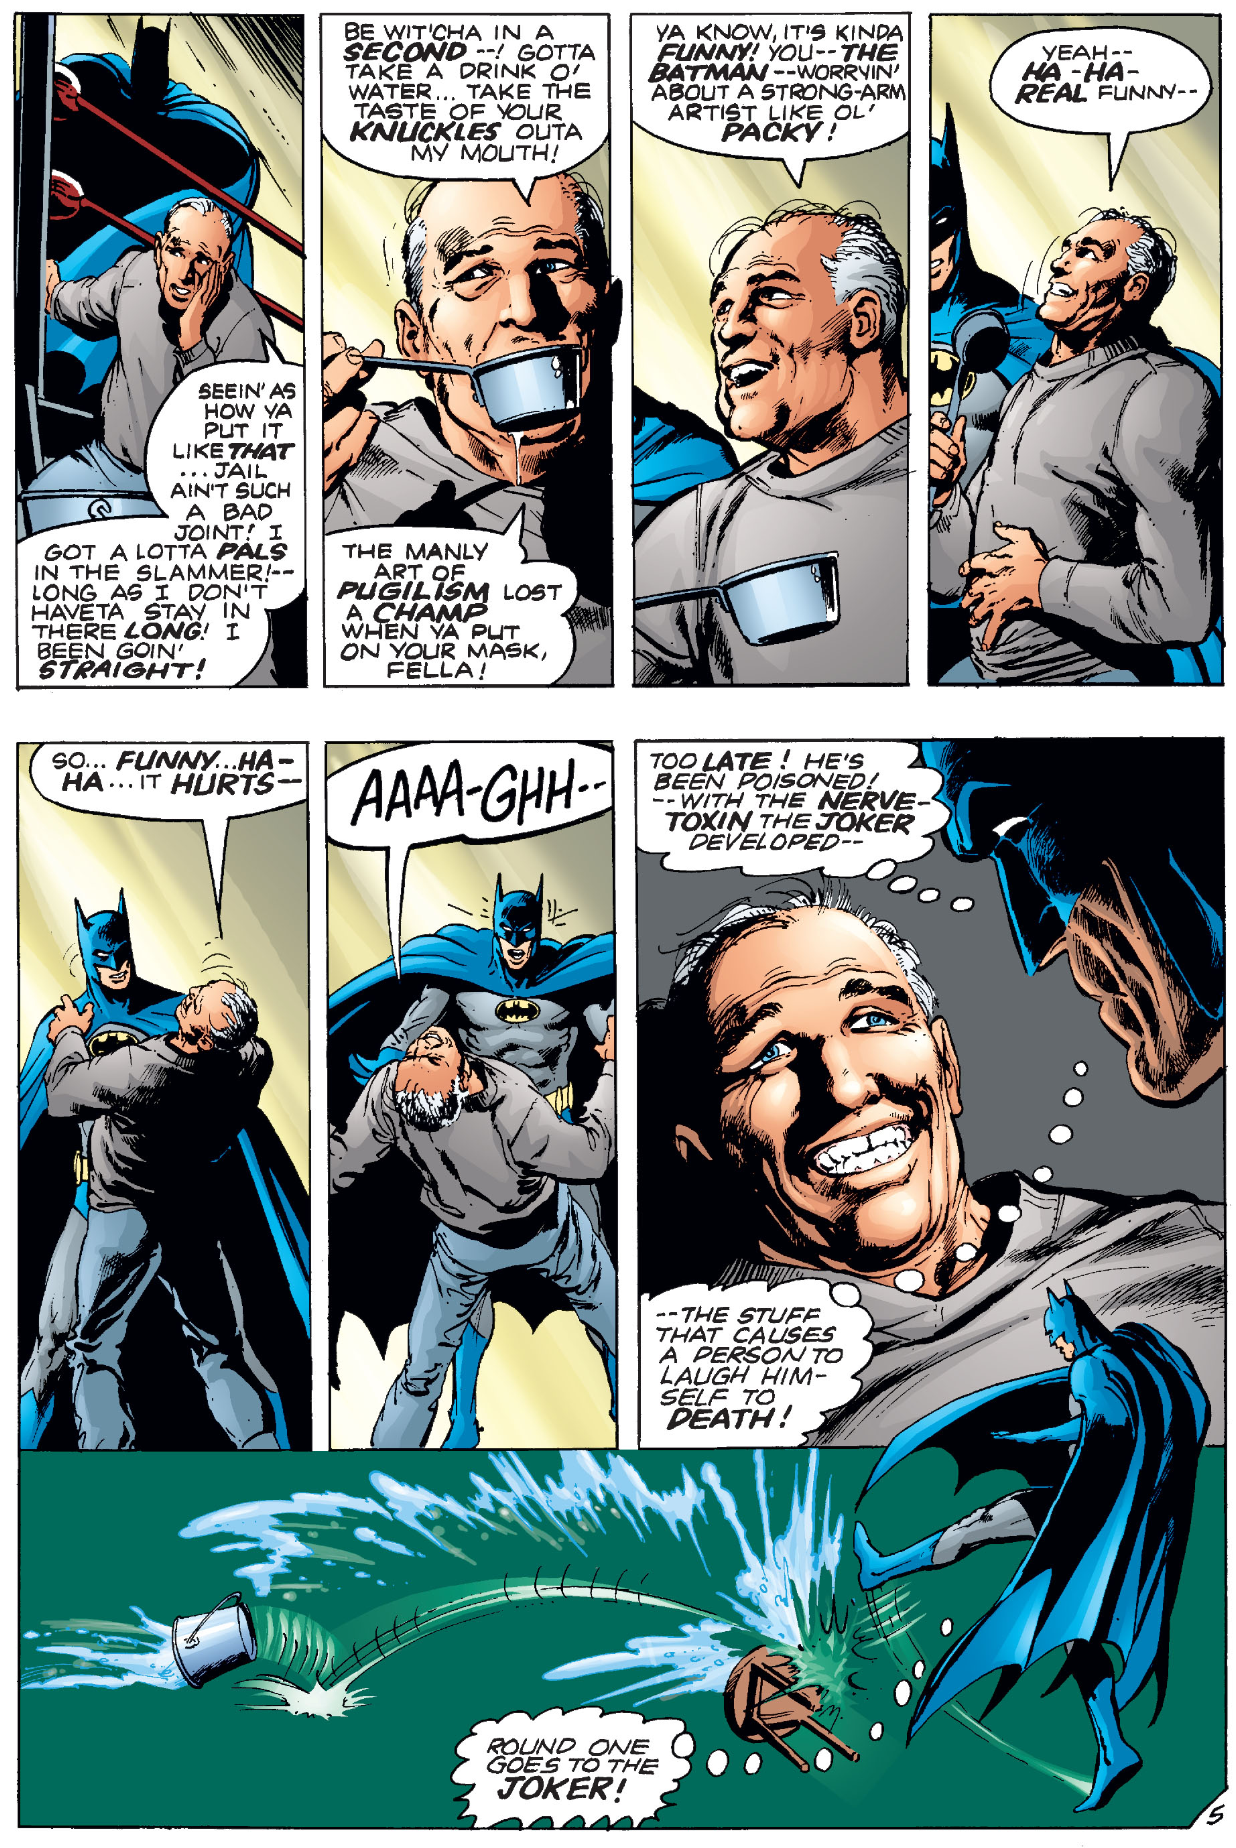 The Joker's second kill in Batman #251